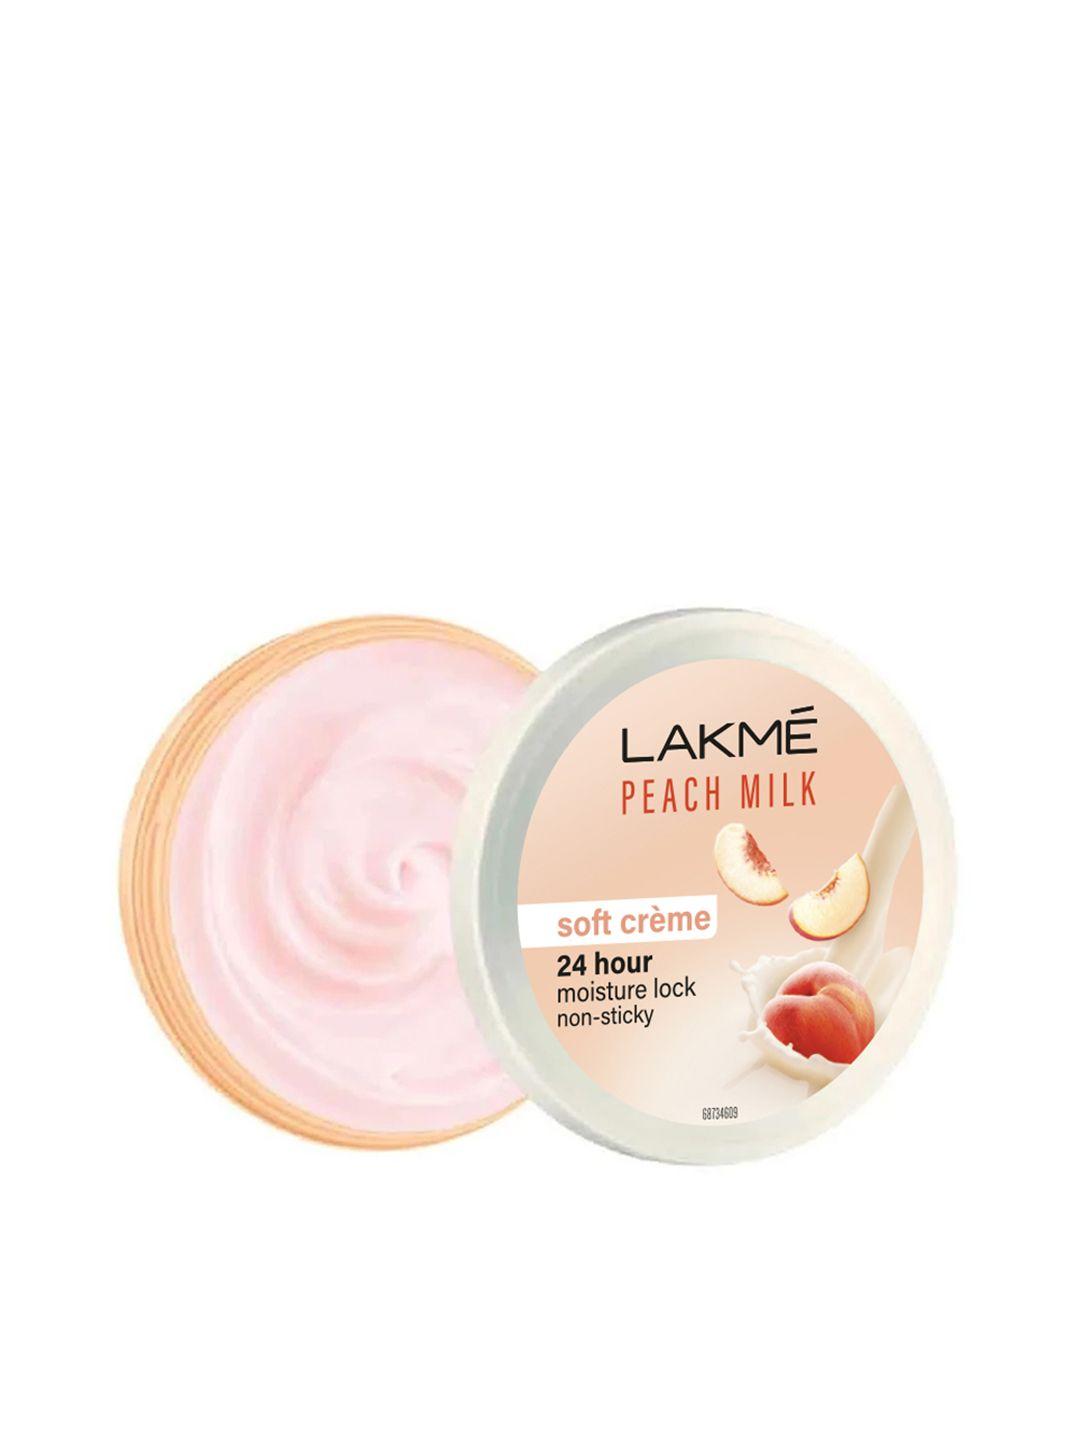 lakme-peach-milk-soft-creme-moisturizer-250g